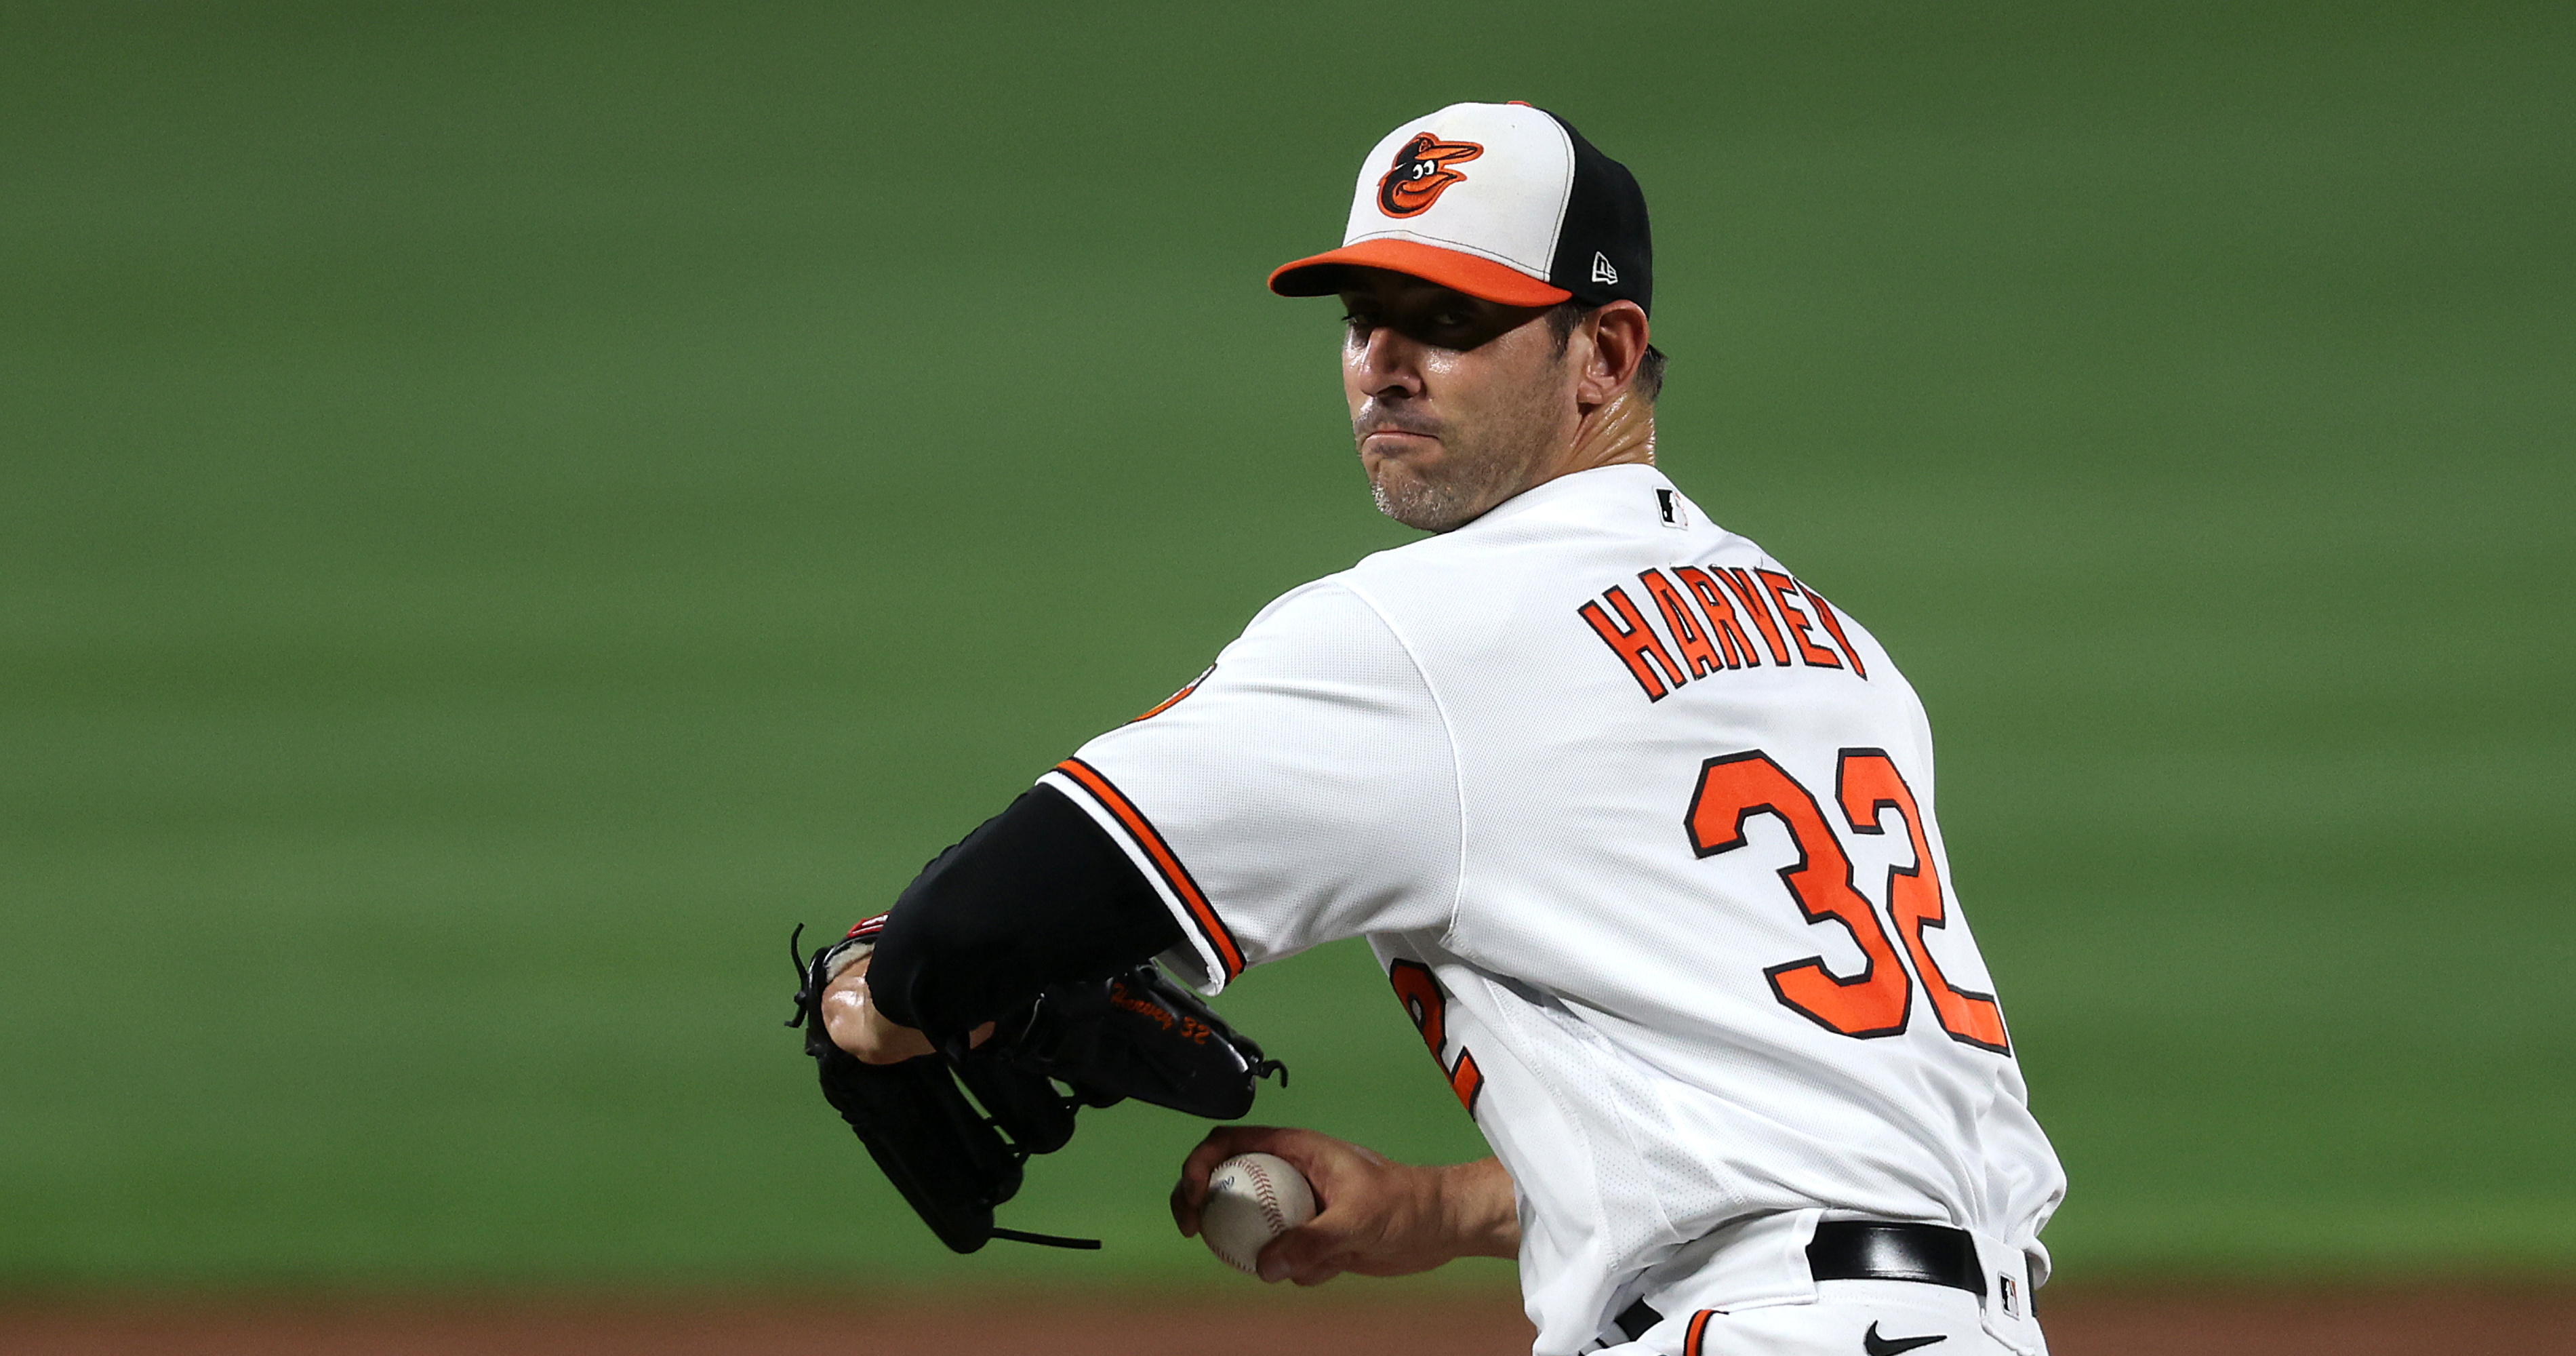 O's Harvey suspended 60 games by MLB for drug distribution